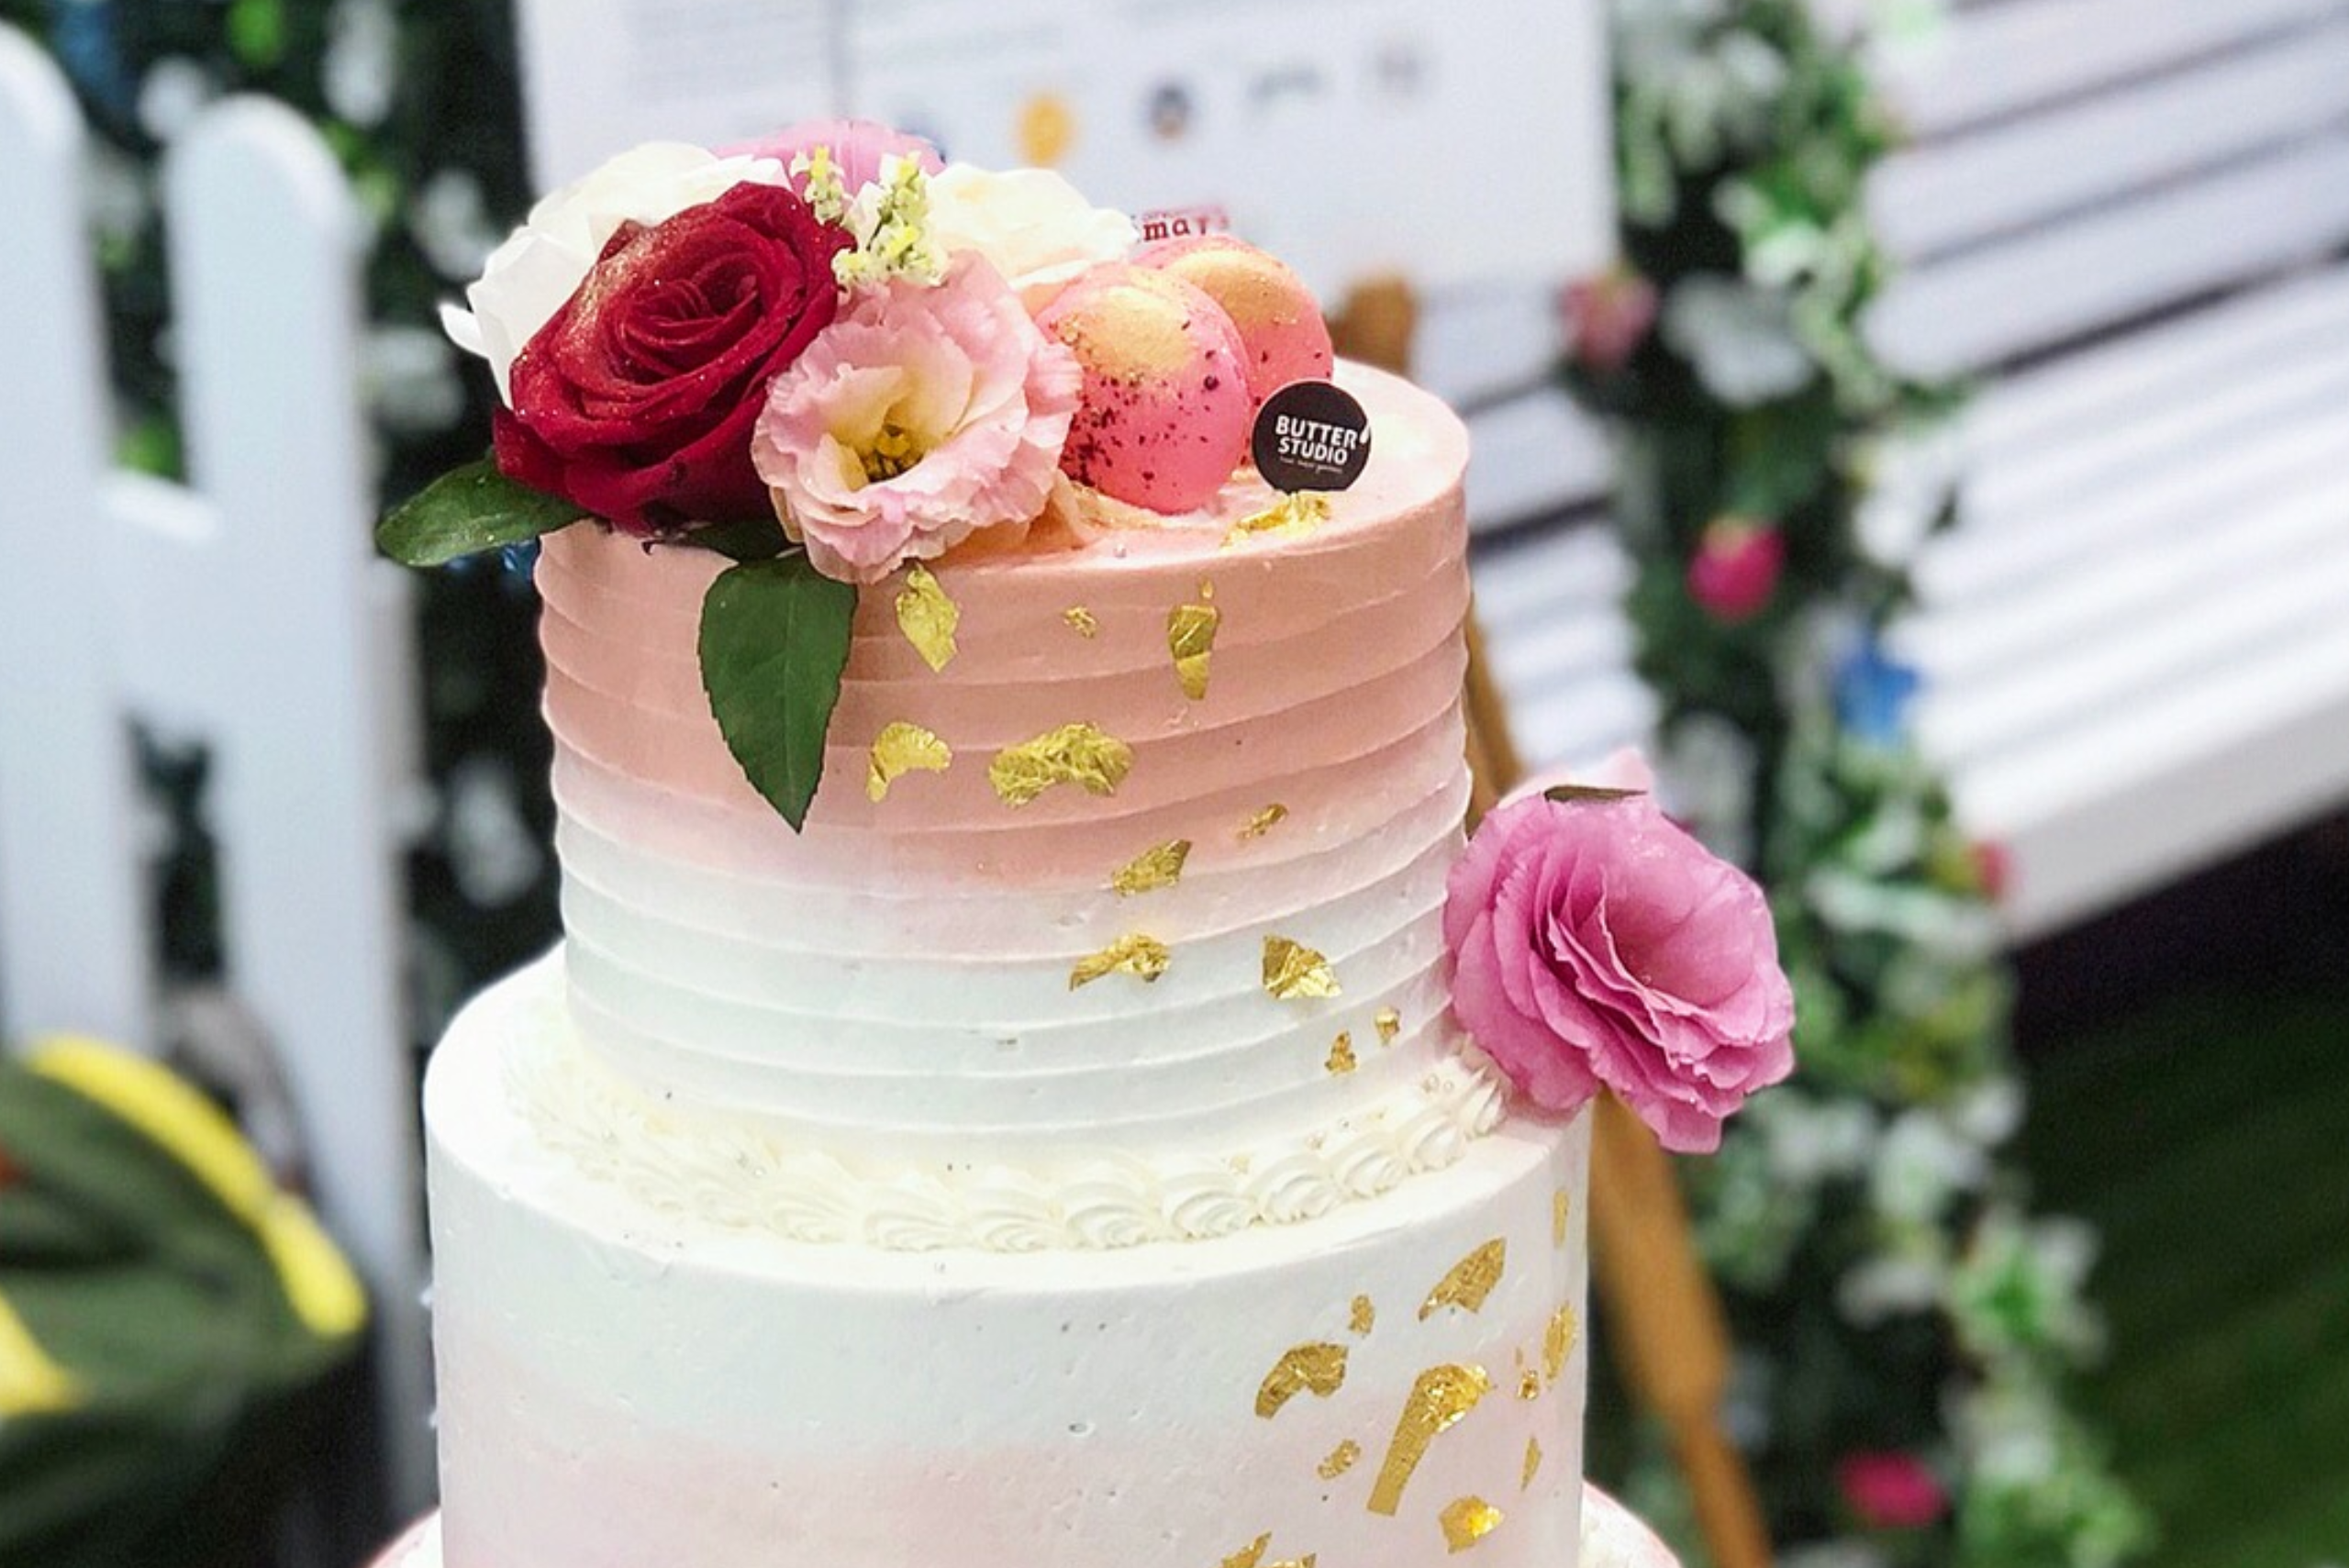 Tiered Wedding Cakes